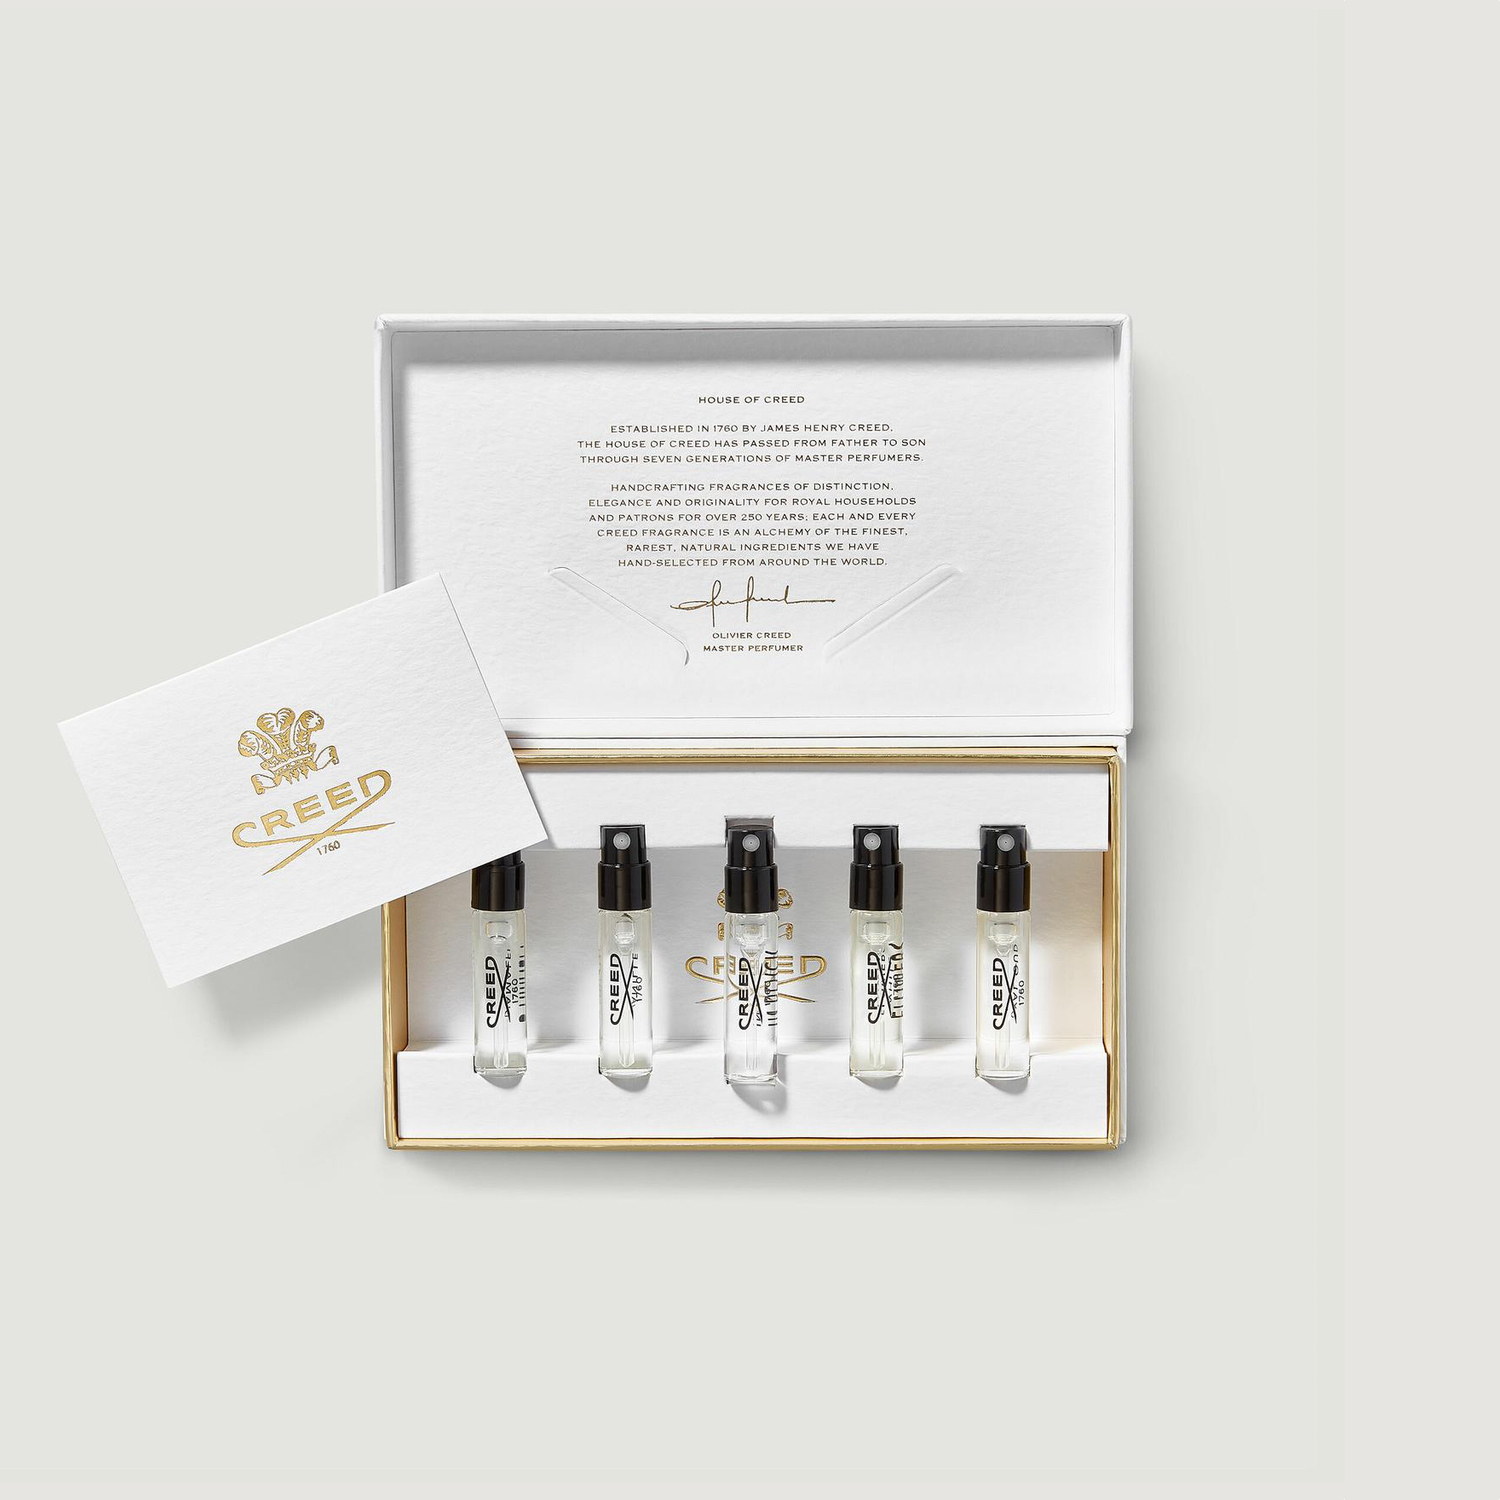 Creed Women's Fragrance Inspiration Kit